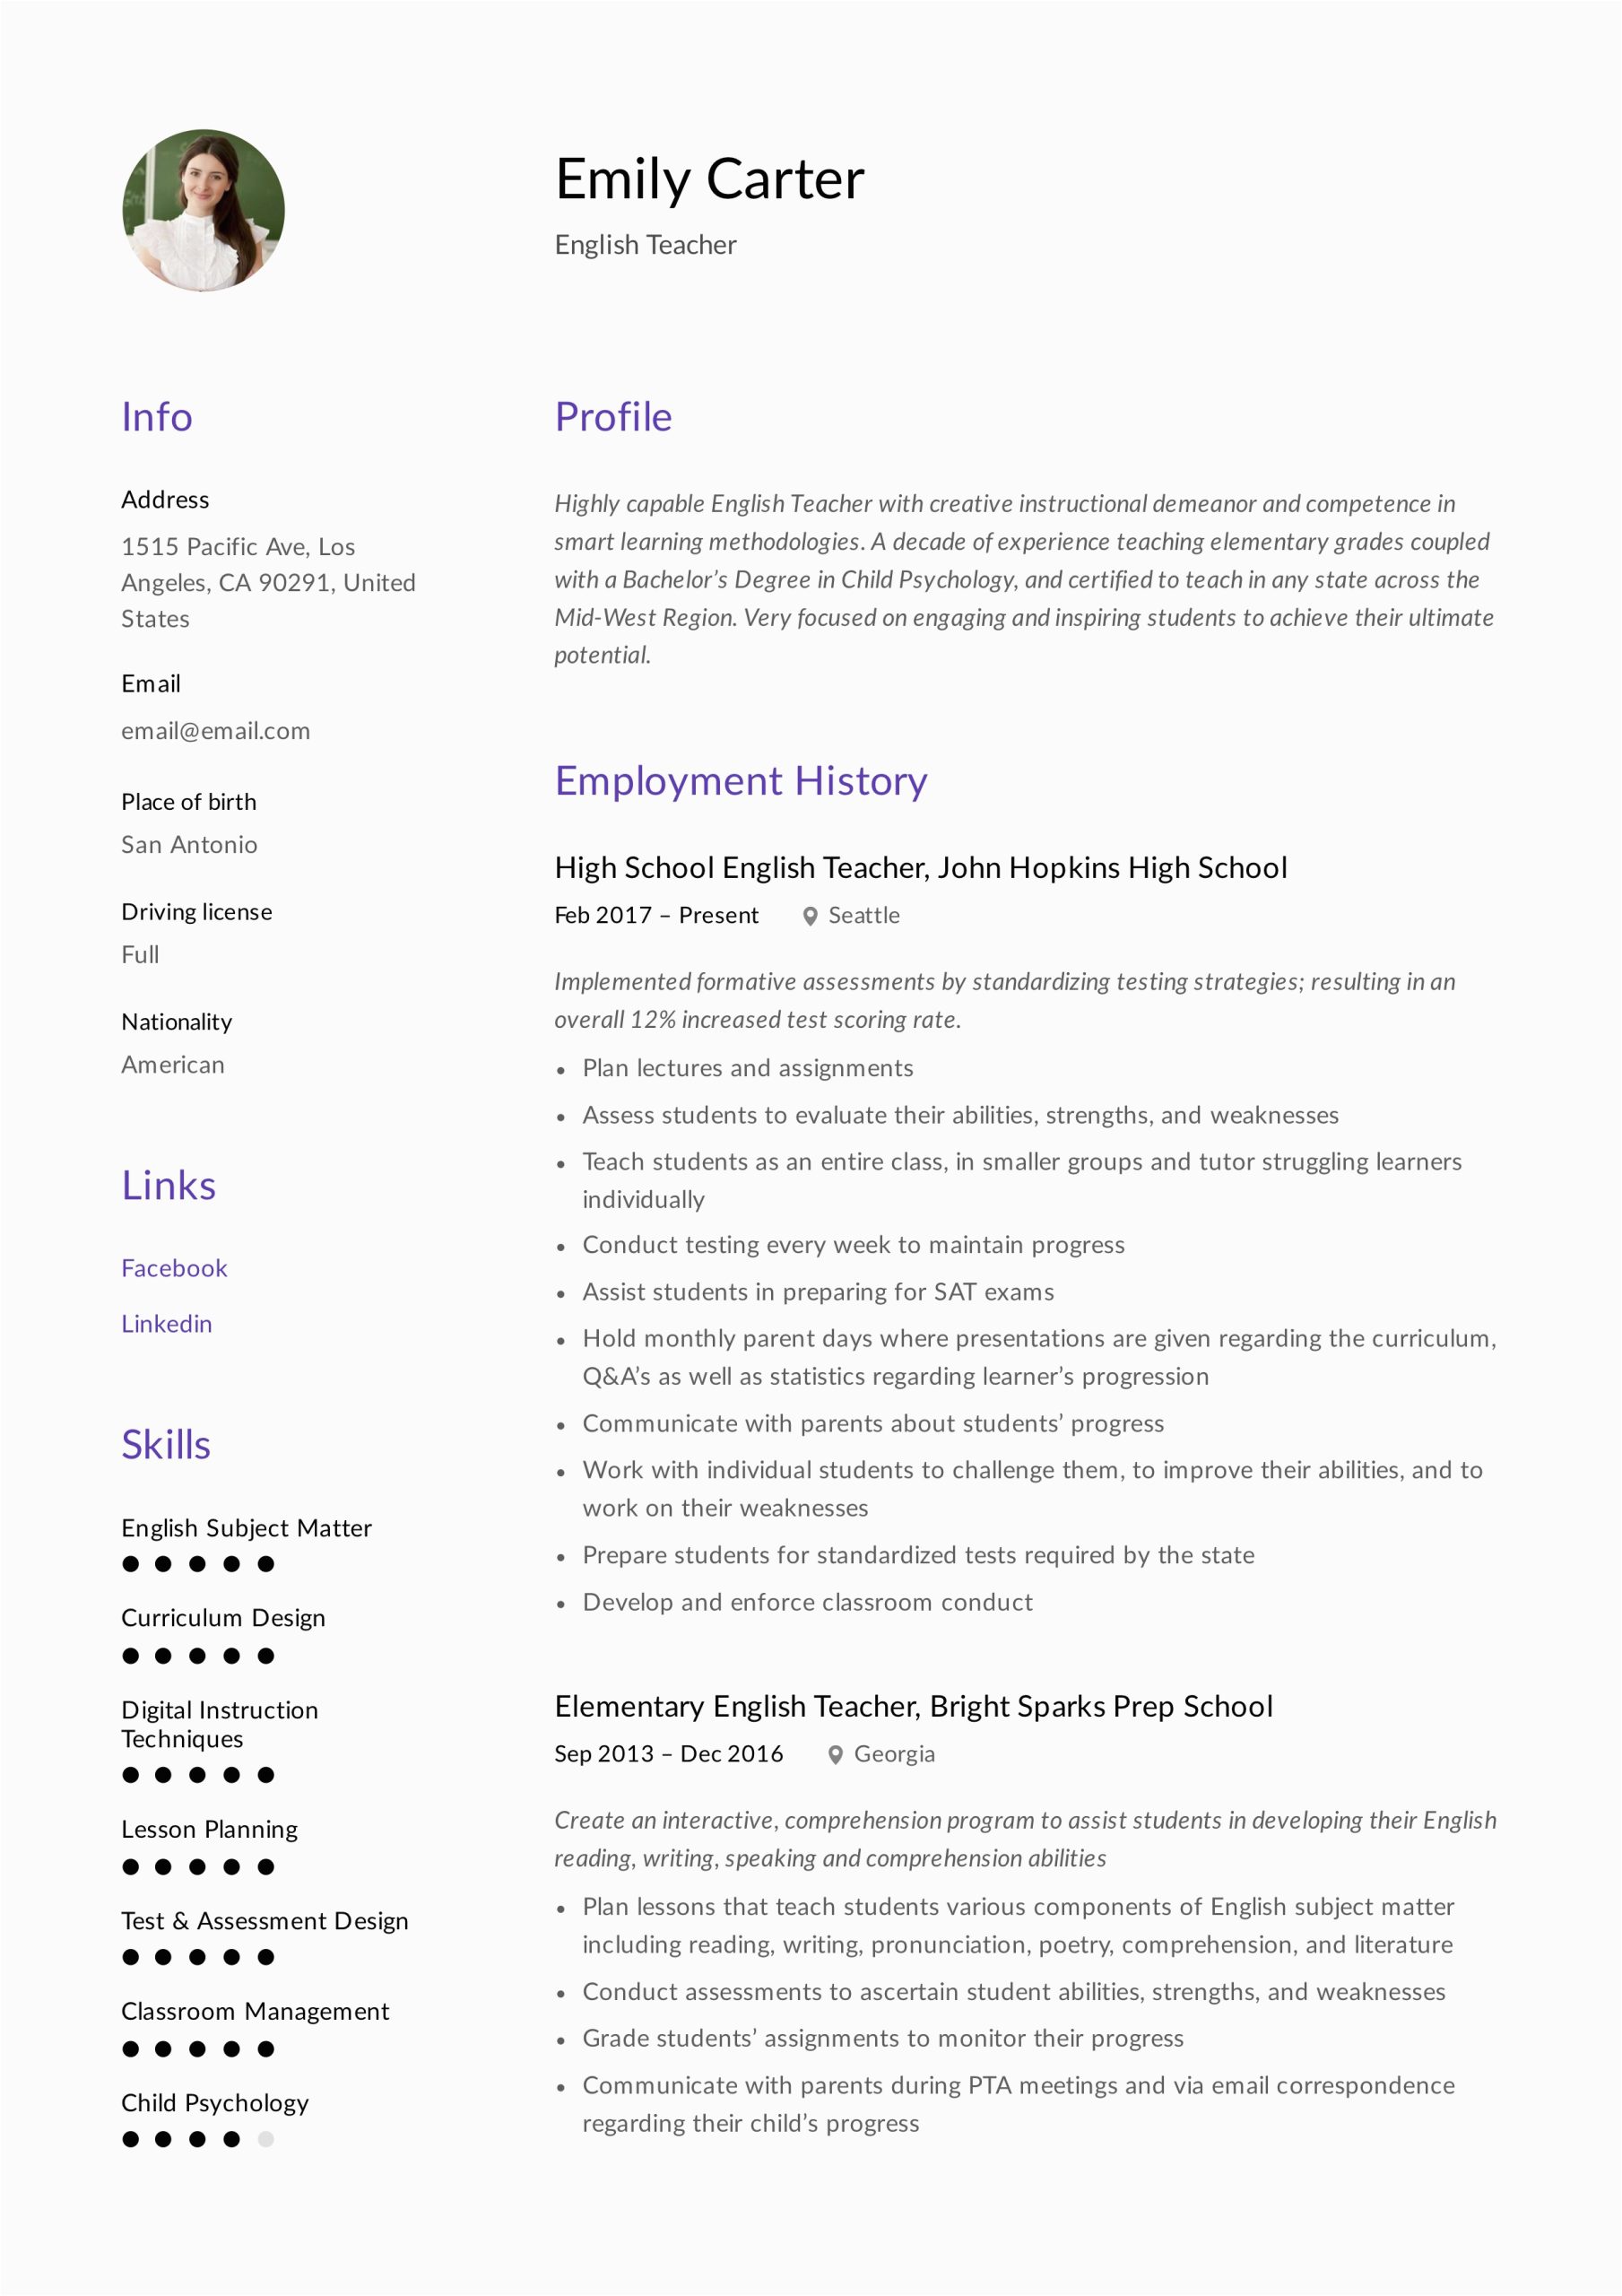 Sample Resume for Teaching English Online English Teacher Resume & Writing Guide 12 Free Templates